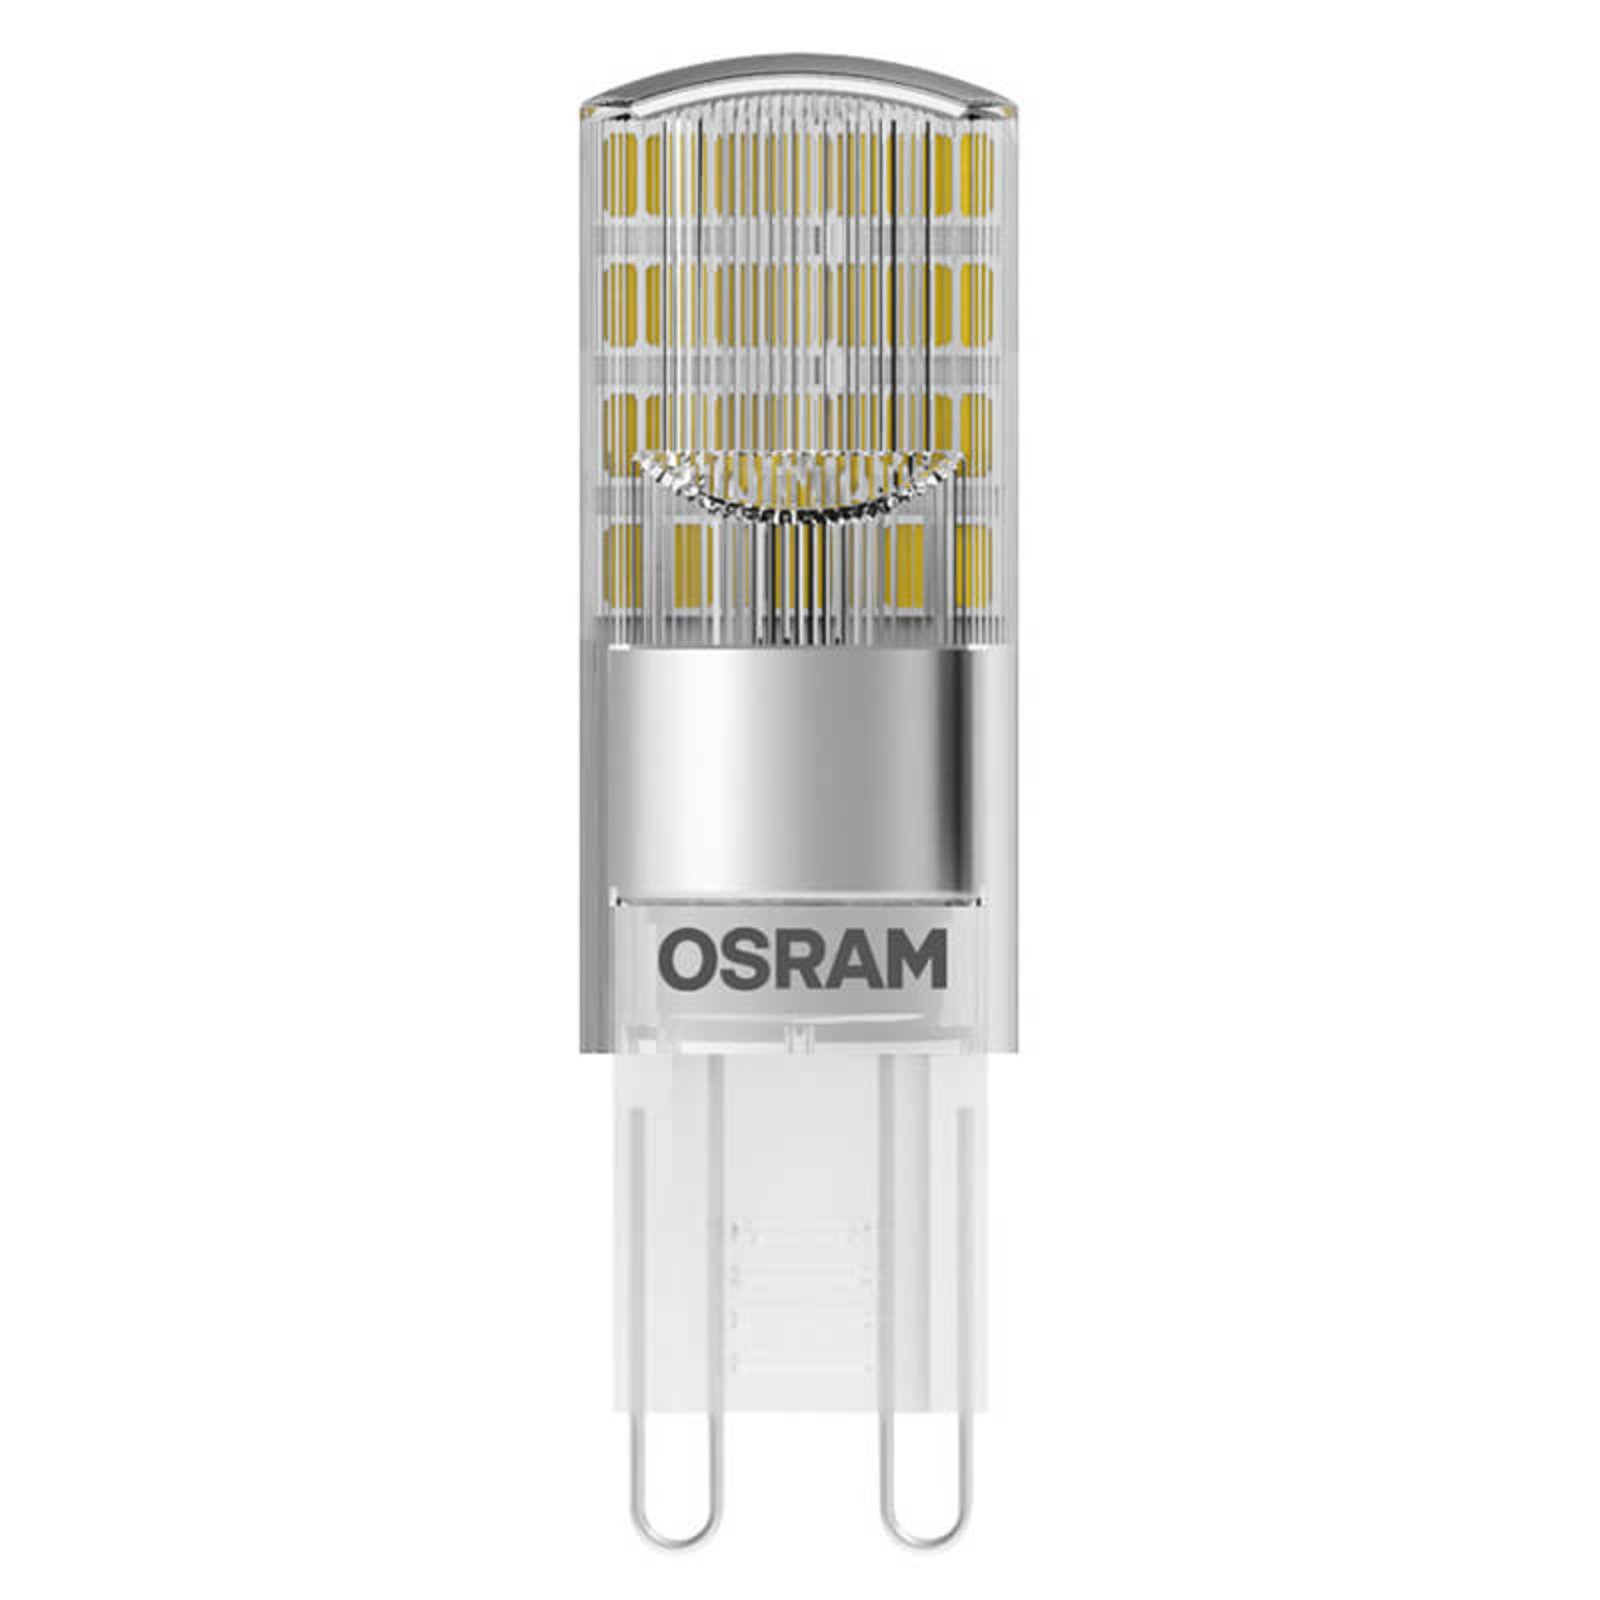 OSRAM LED-stiftlampa G9 2,6 W, varmvit, 320 lm